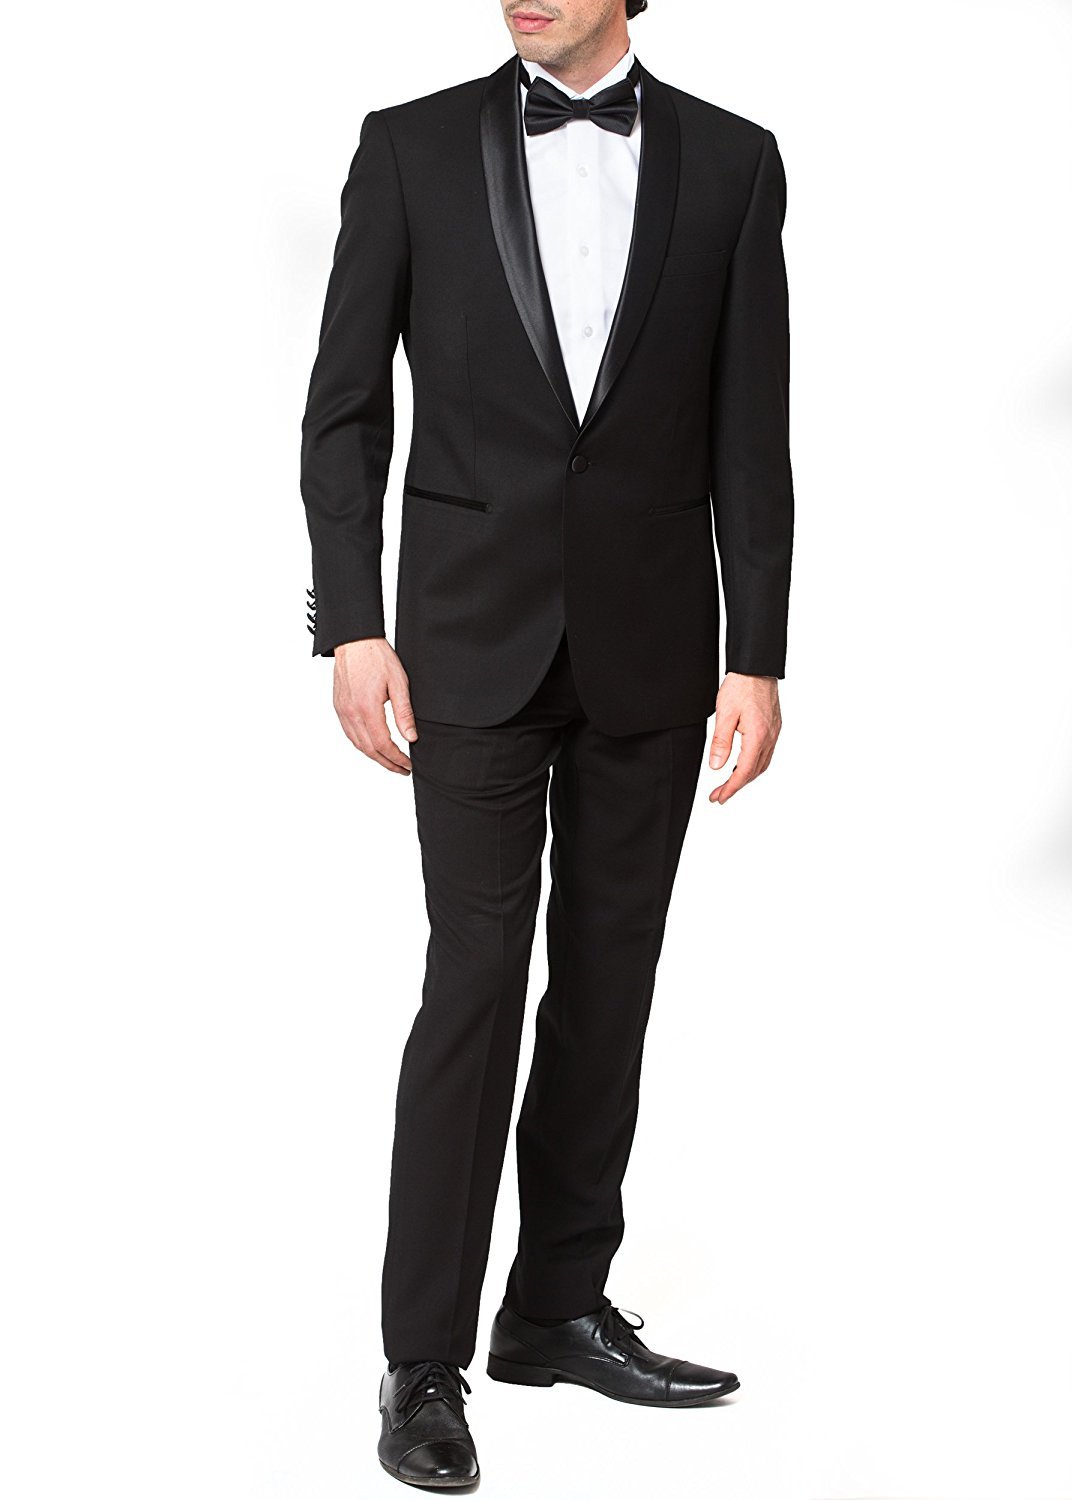 Giorgio Fiorelli Men’s G47815/1 One Button Modern Fit Two-Piece Shawl Collar Tuxedo Suit Set - Black - 44R - image 2 of 5